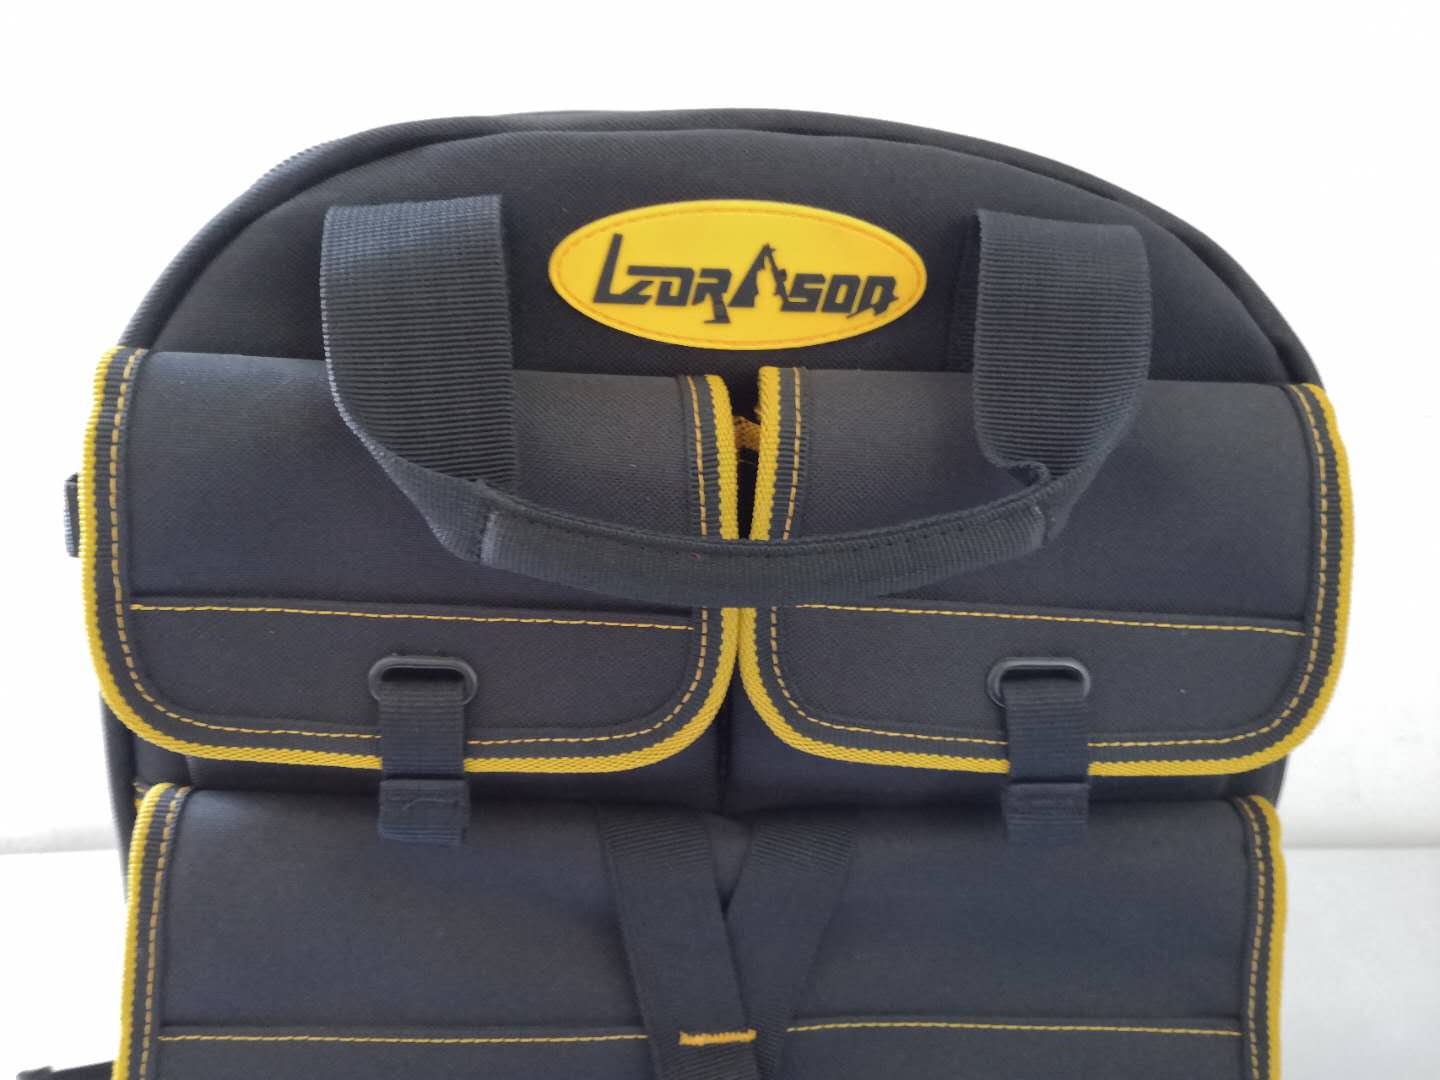 Lzdrason New leather tool belt pouches Ergonomic design for work